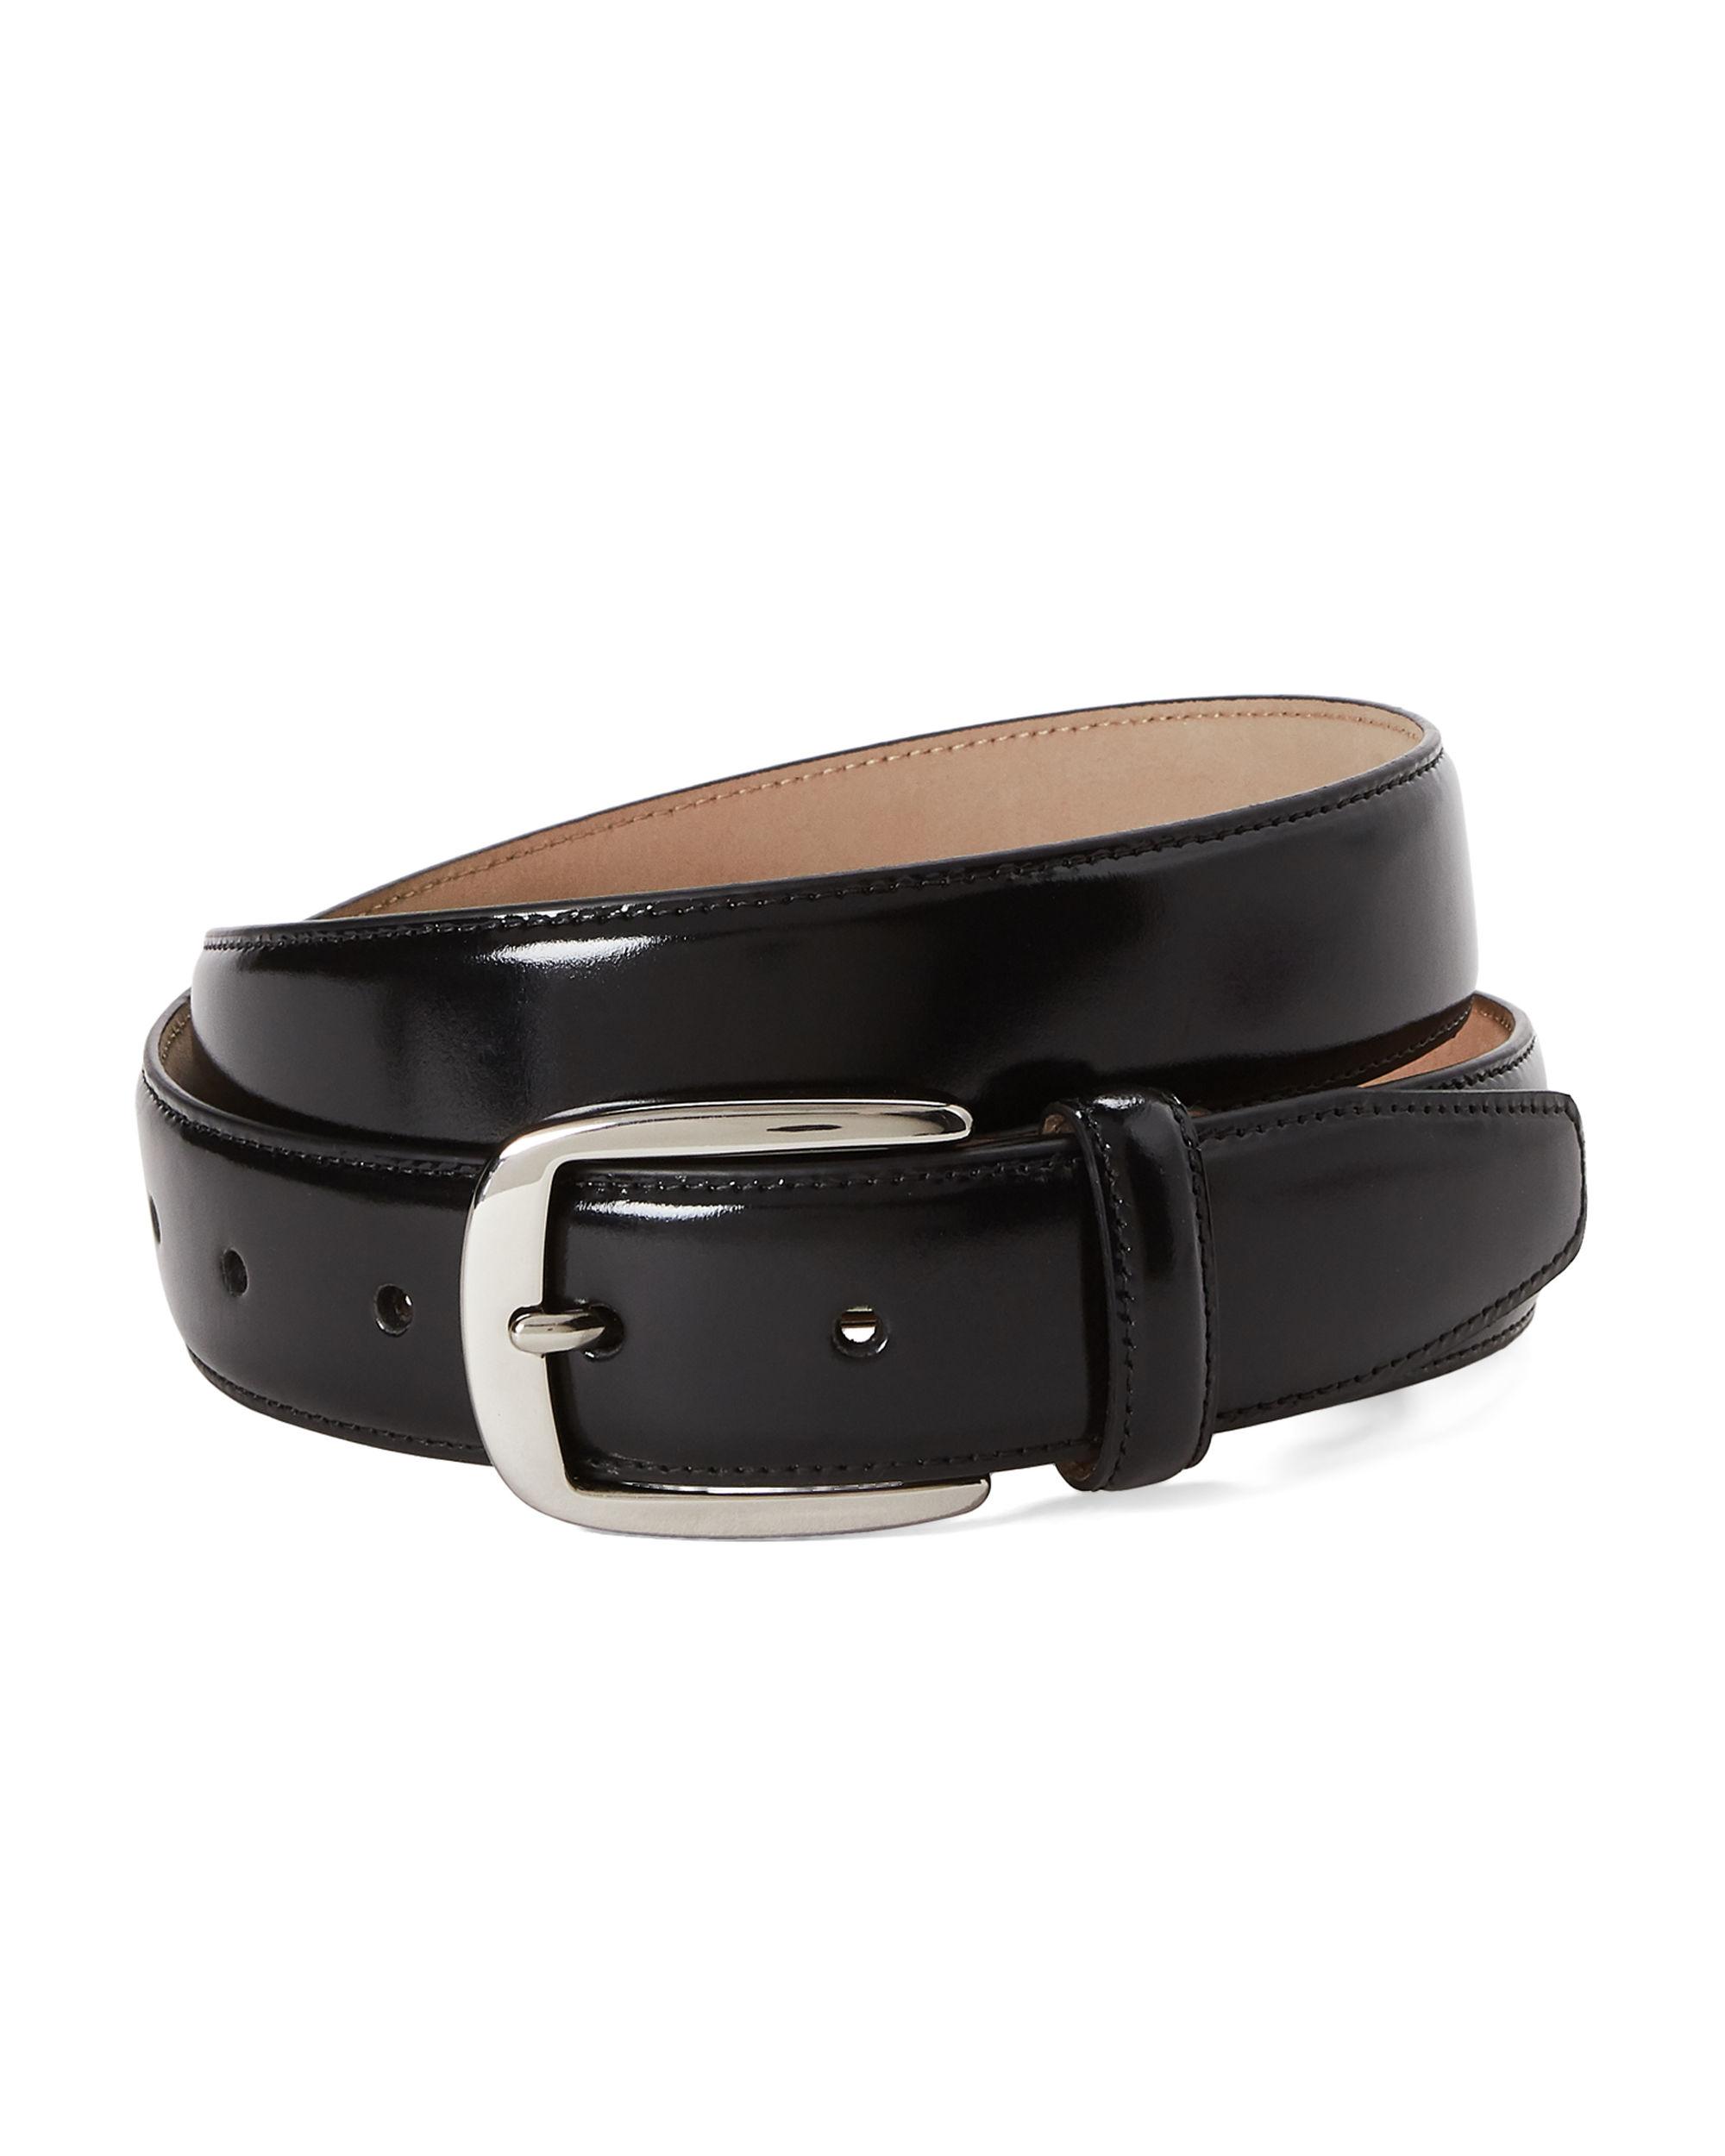 Trafalgar Black Victor Leather Belt in Black for Men - Lyst